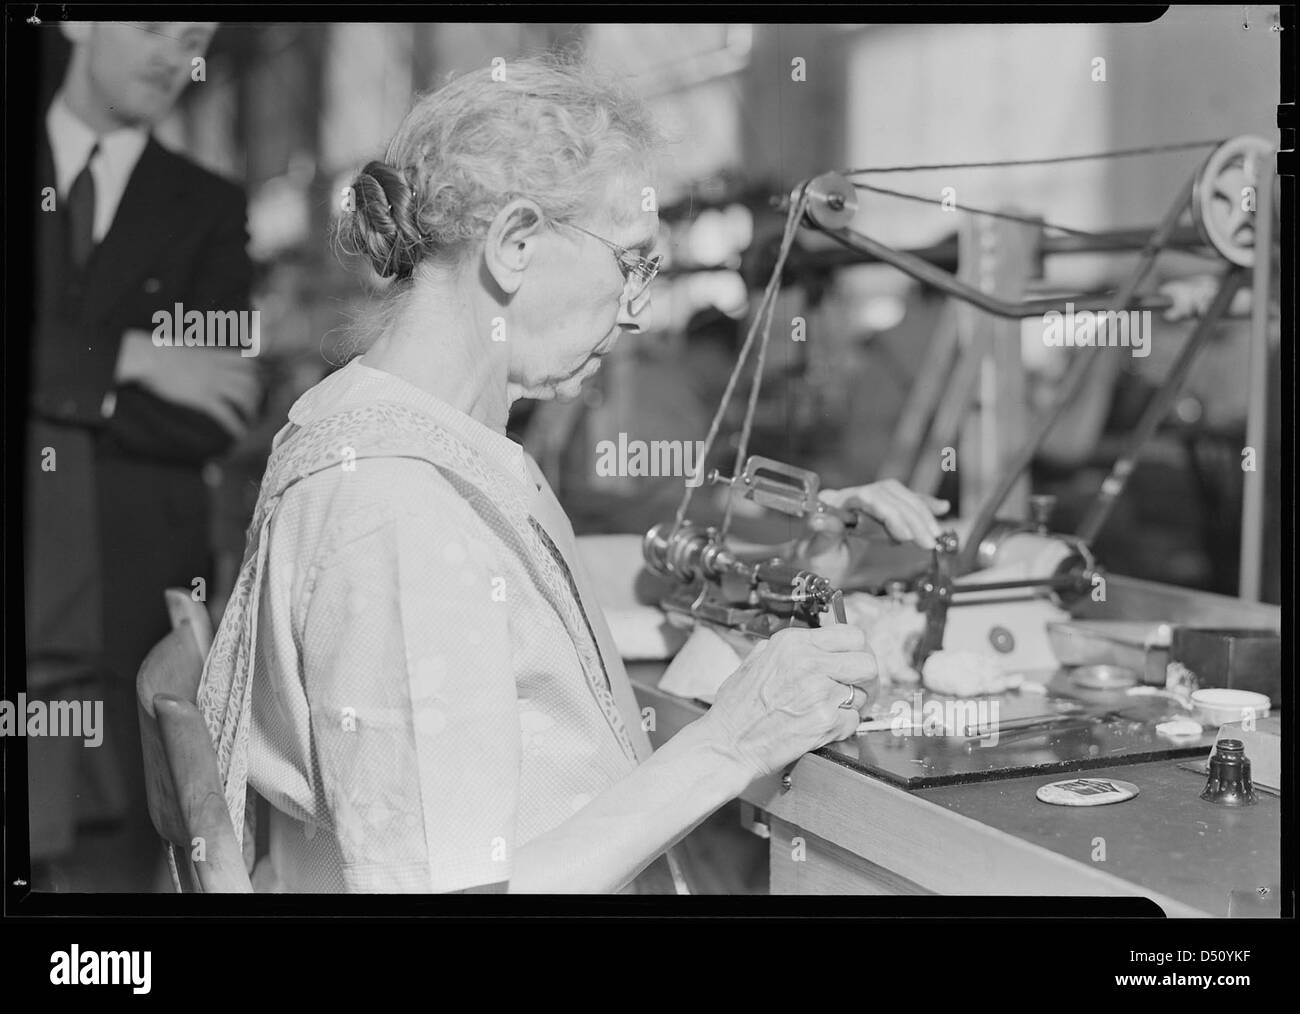 Hamilton Watch. Operation - polishing machine - machine is called wig-wag machine and is used to polish pivots and staff shoulders - semi-skilled operation, 1936 Stock Photo